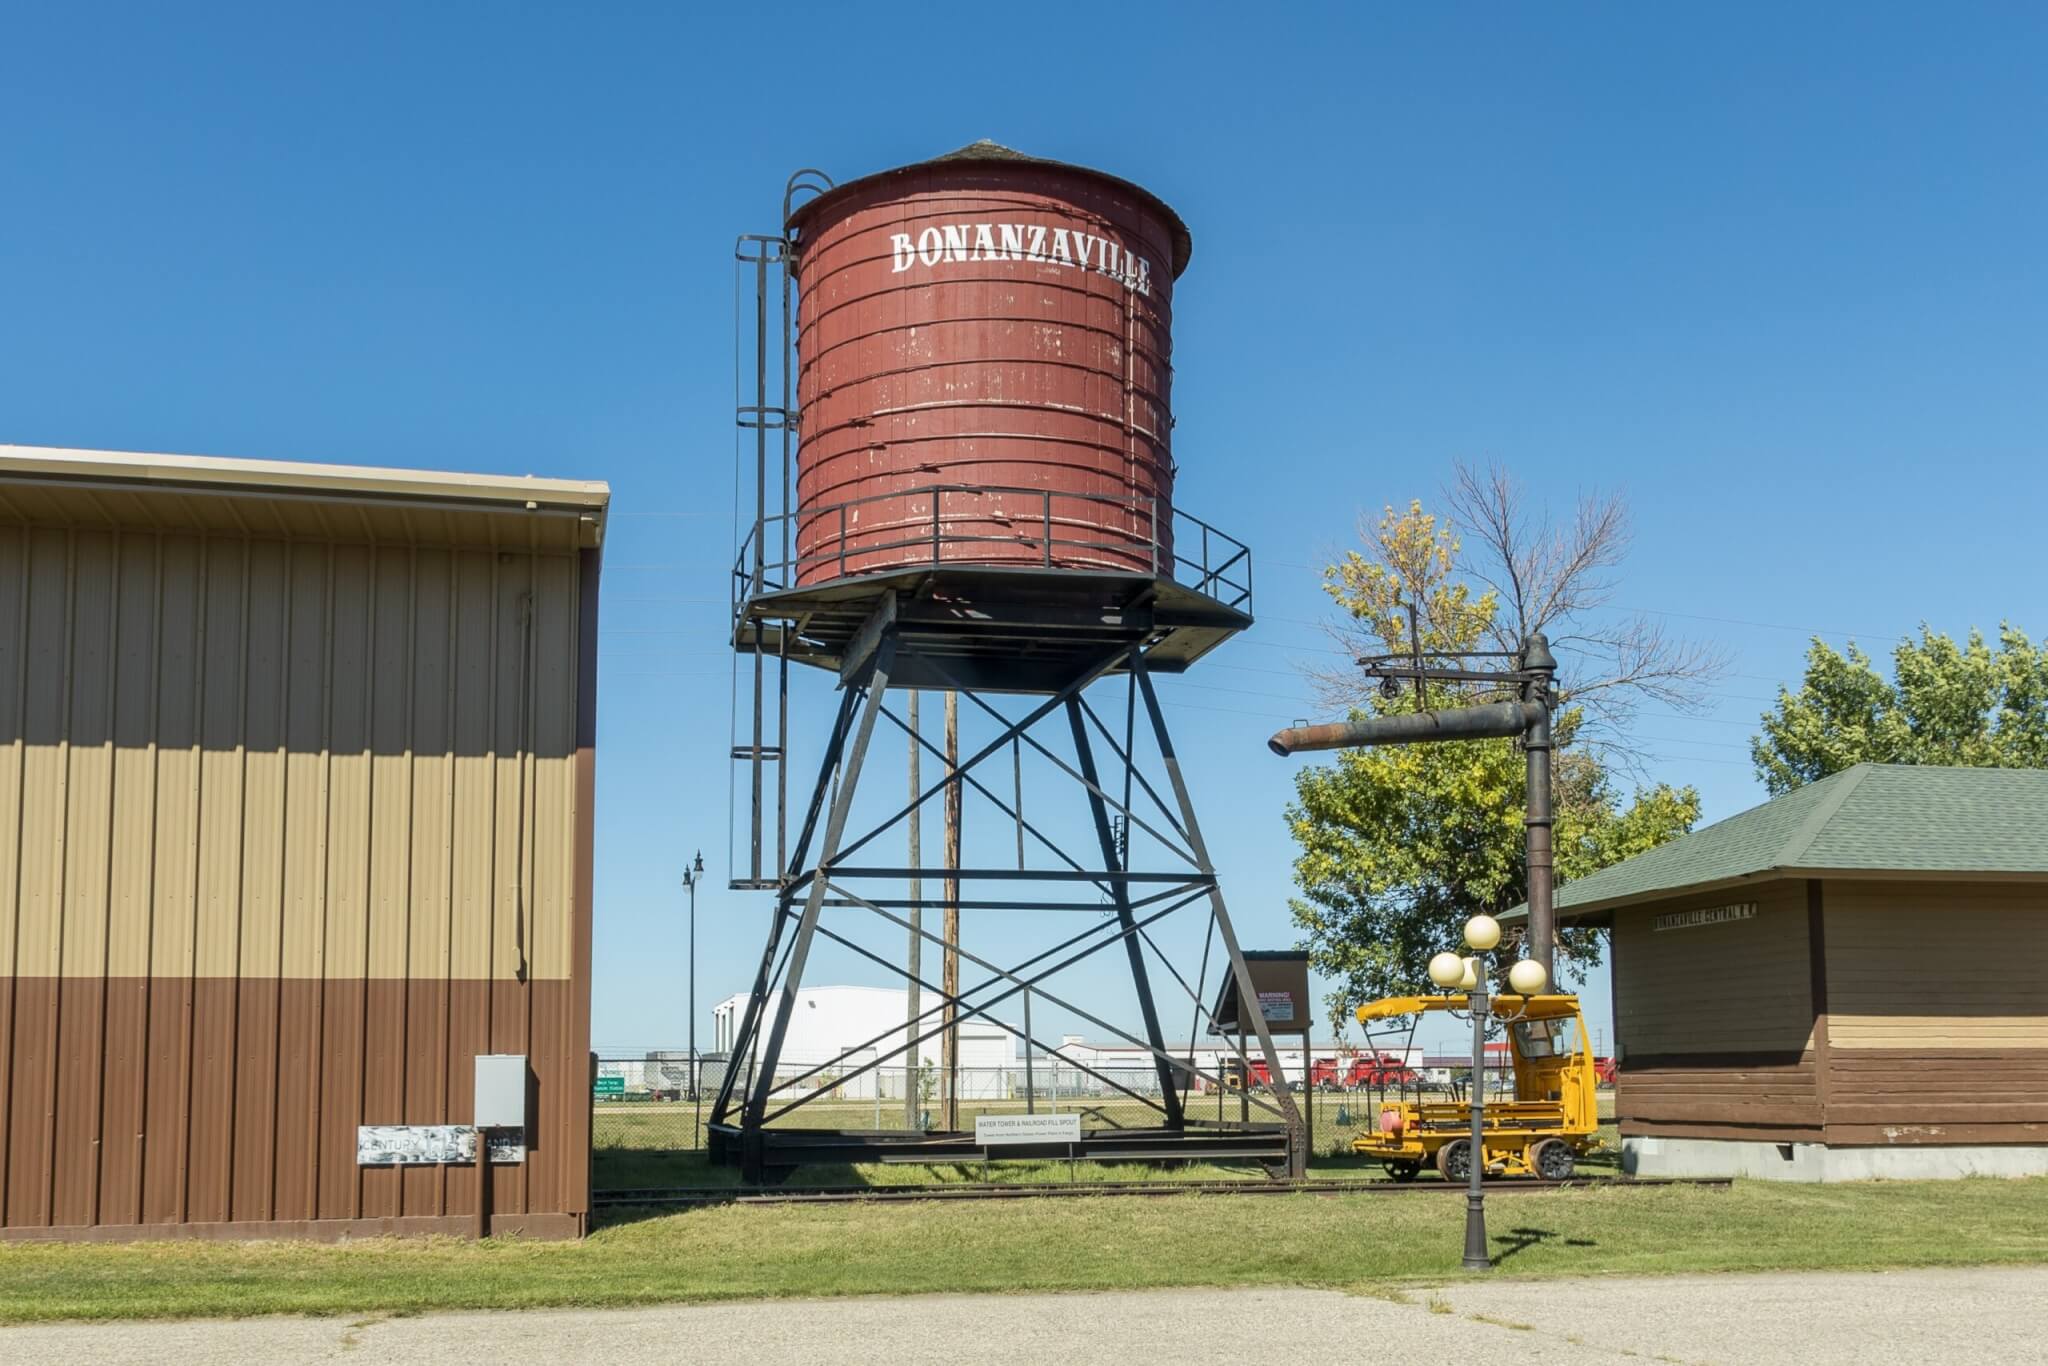 Bonanzaville museum and water tower in West Fargo, North Dakota